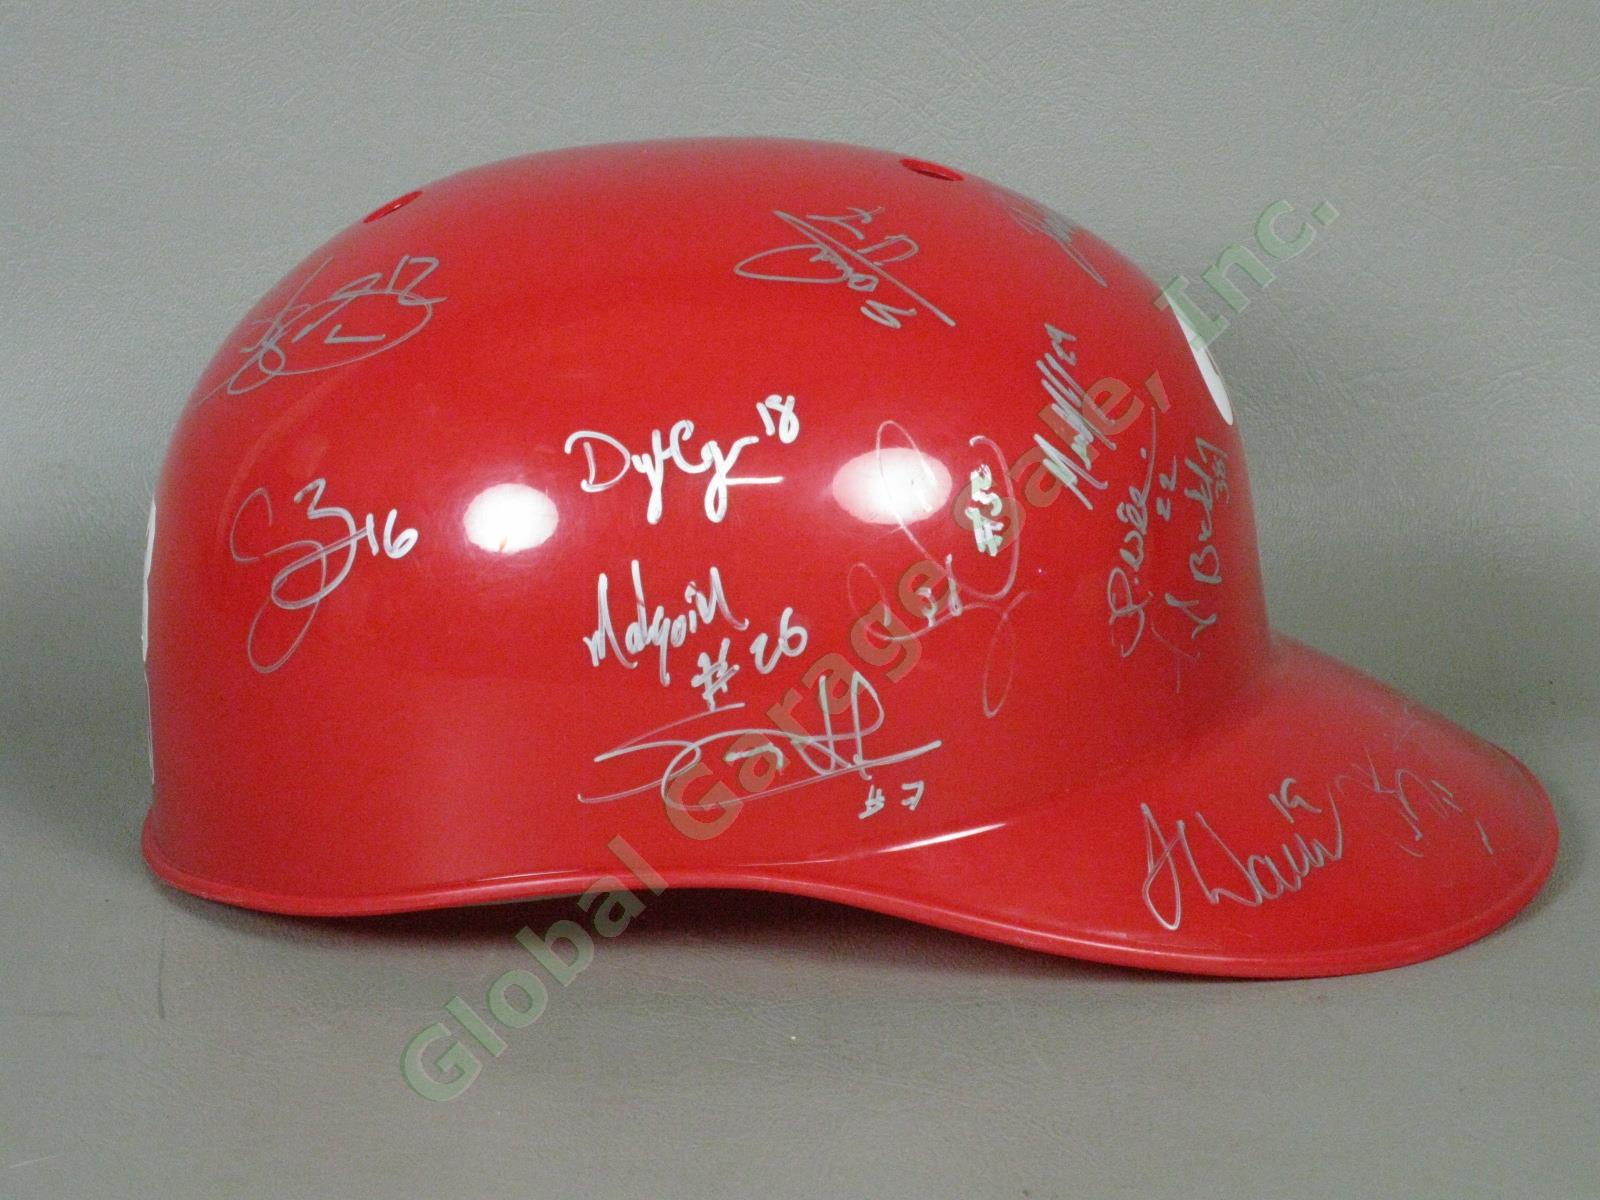 2013 Williamsport Crosscutters Team Signed Baseball Helmet Philadelphia Phillies 1